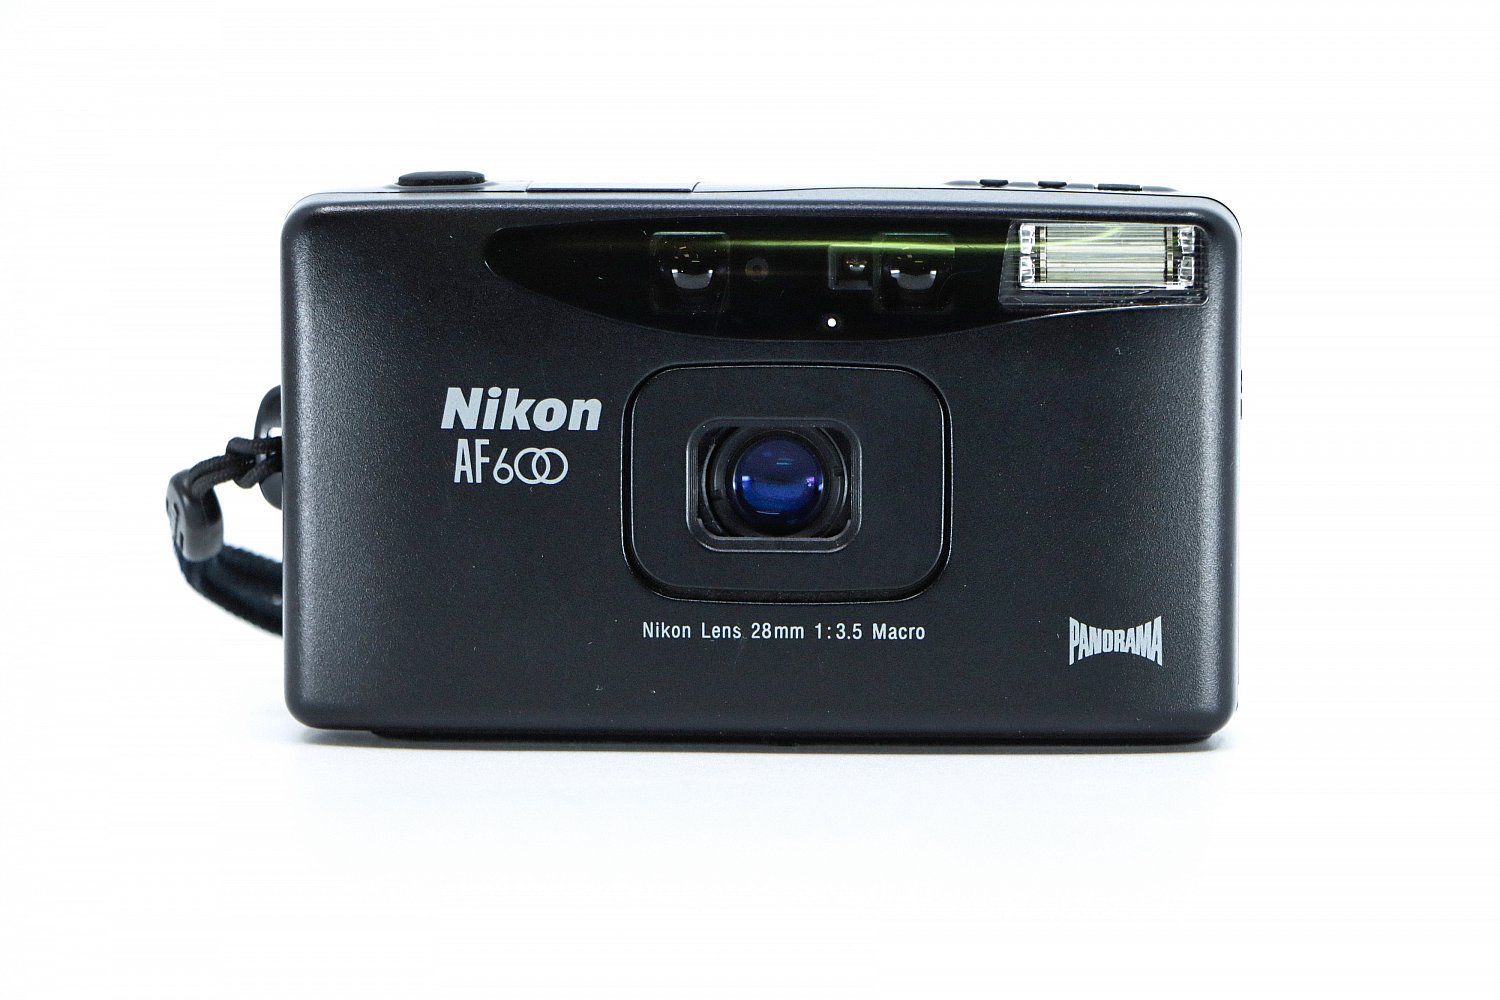  Nikon AF 600 Panorama | IMG_4375.jpeg